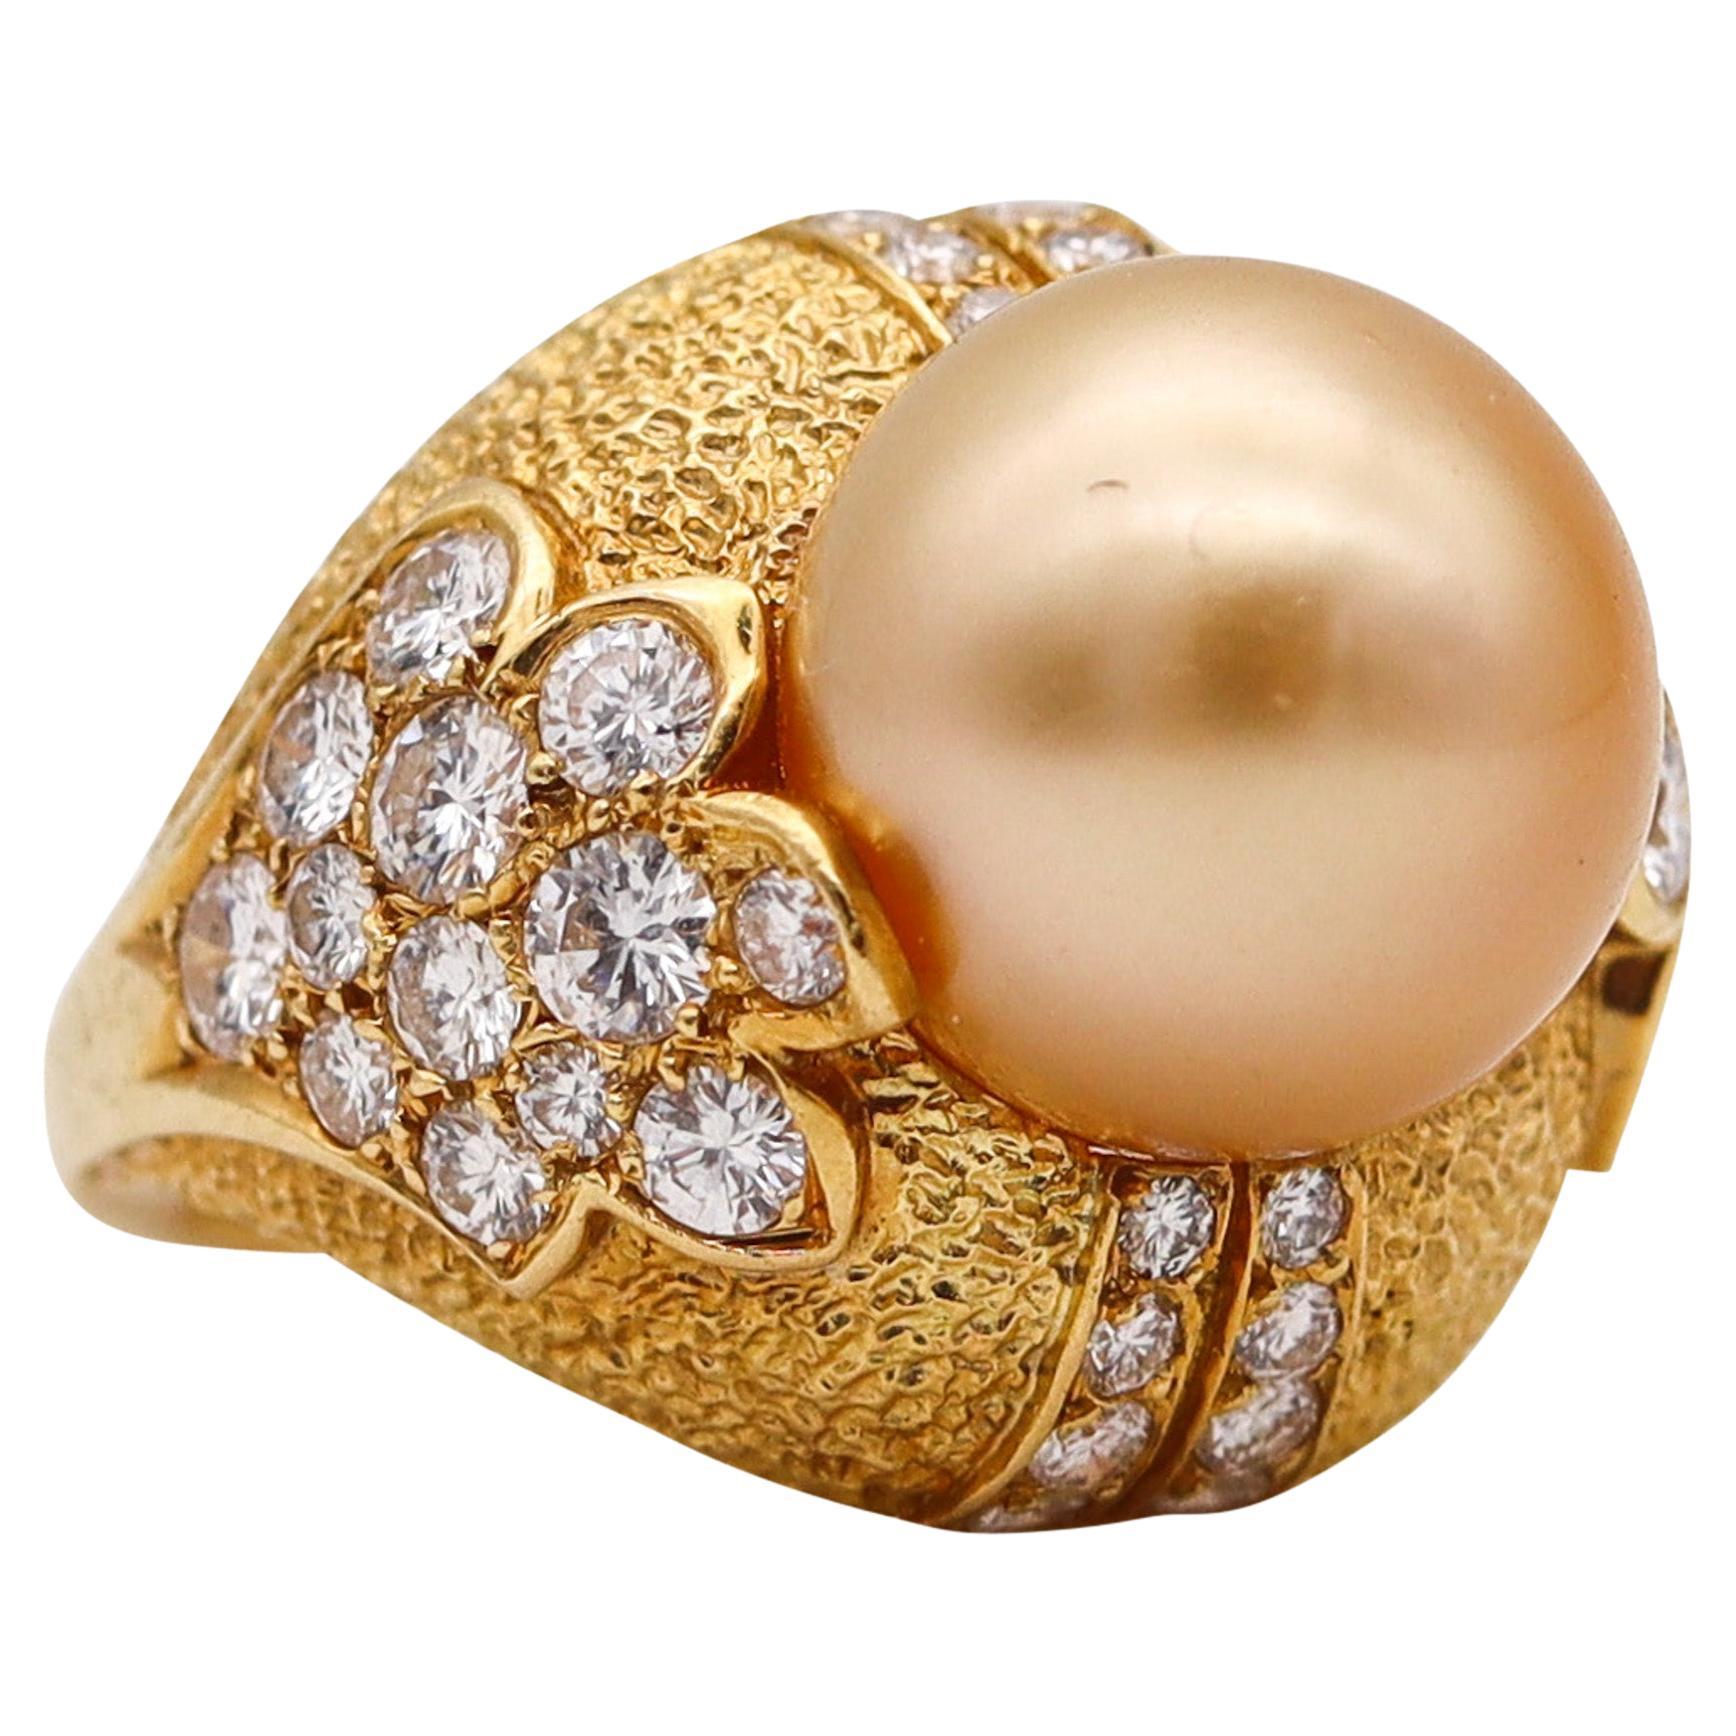 Van Cleef & Arpels Bague cocktail en or 18 carats avec perles dorées et diamants de 3,46 carats